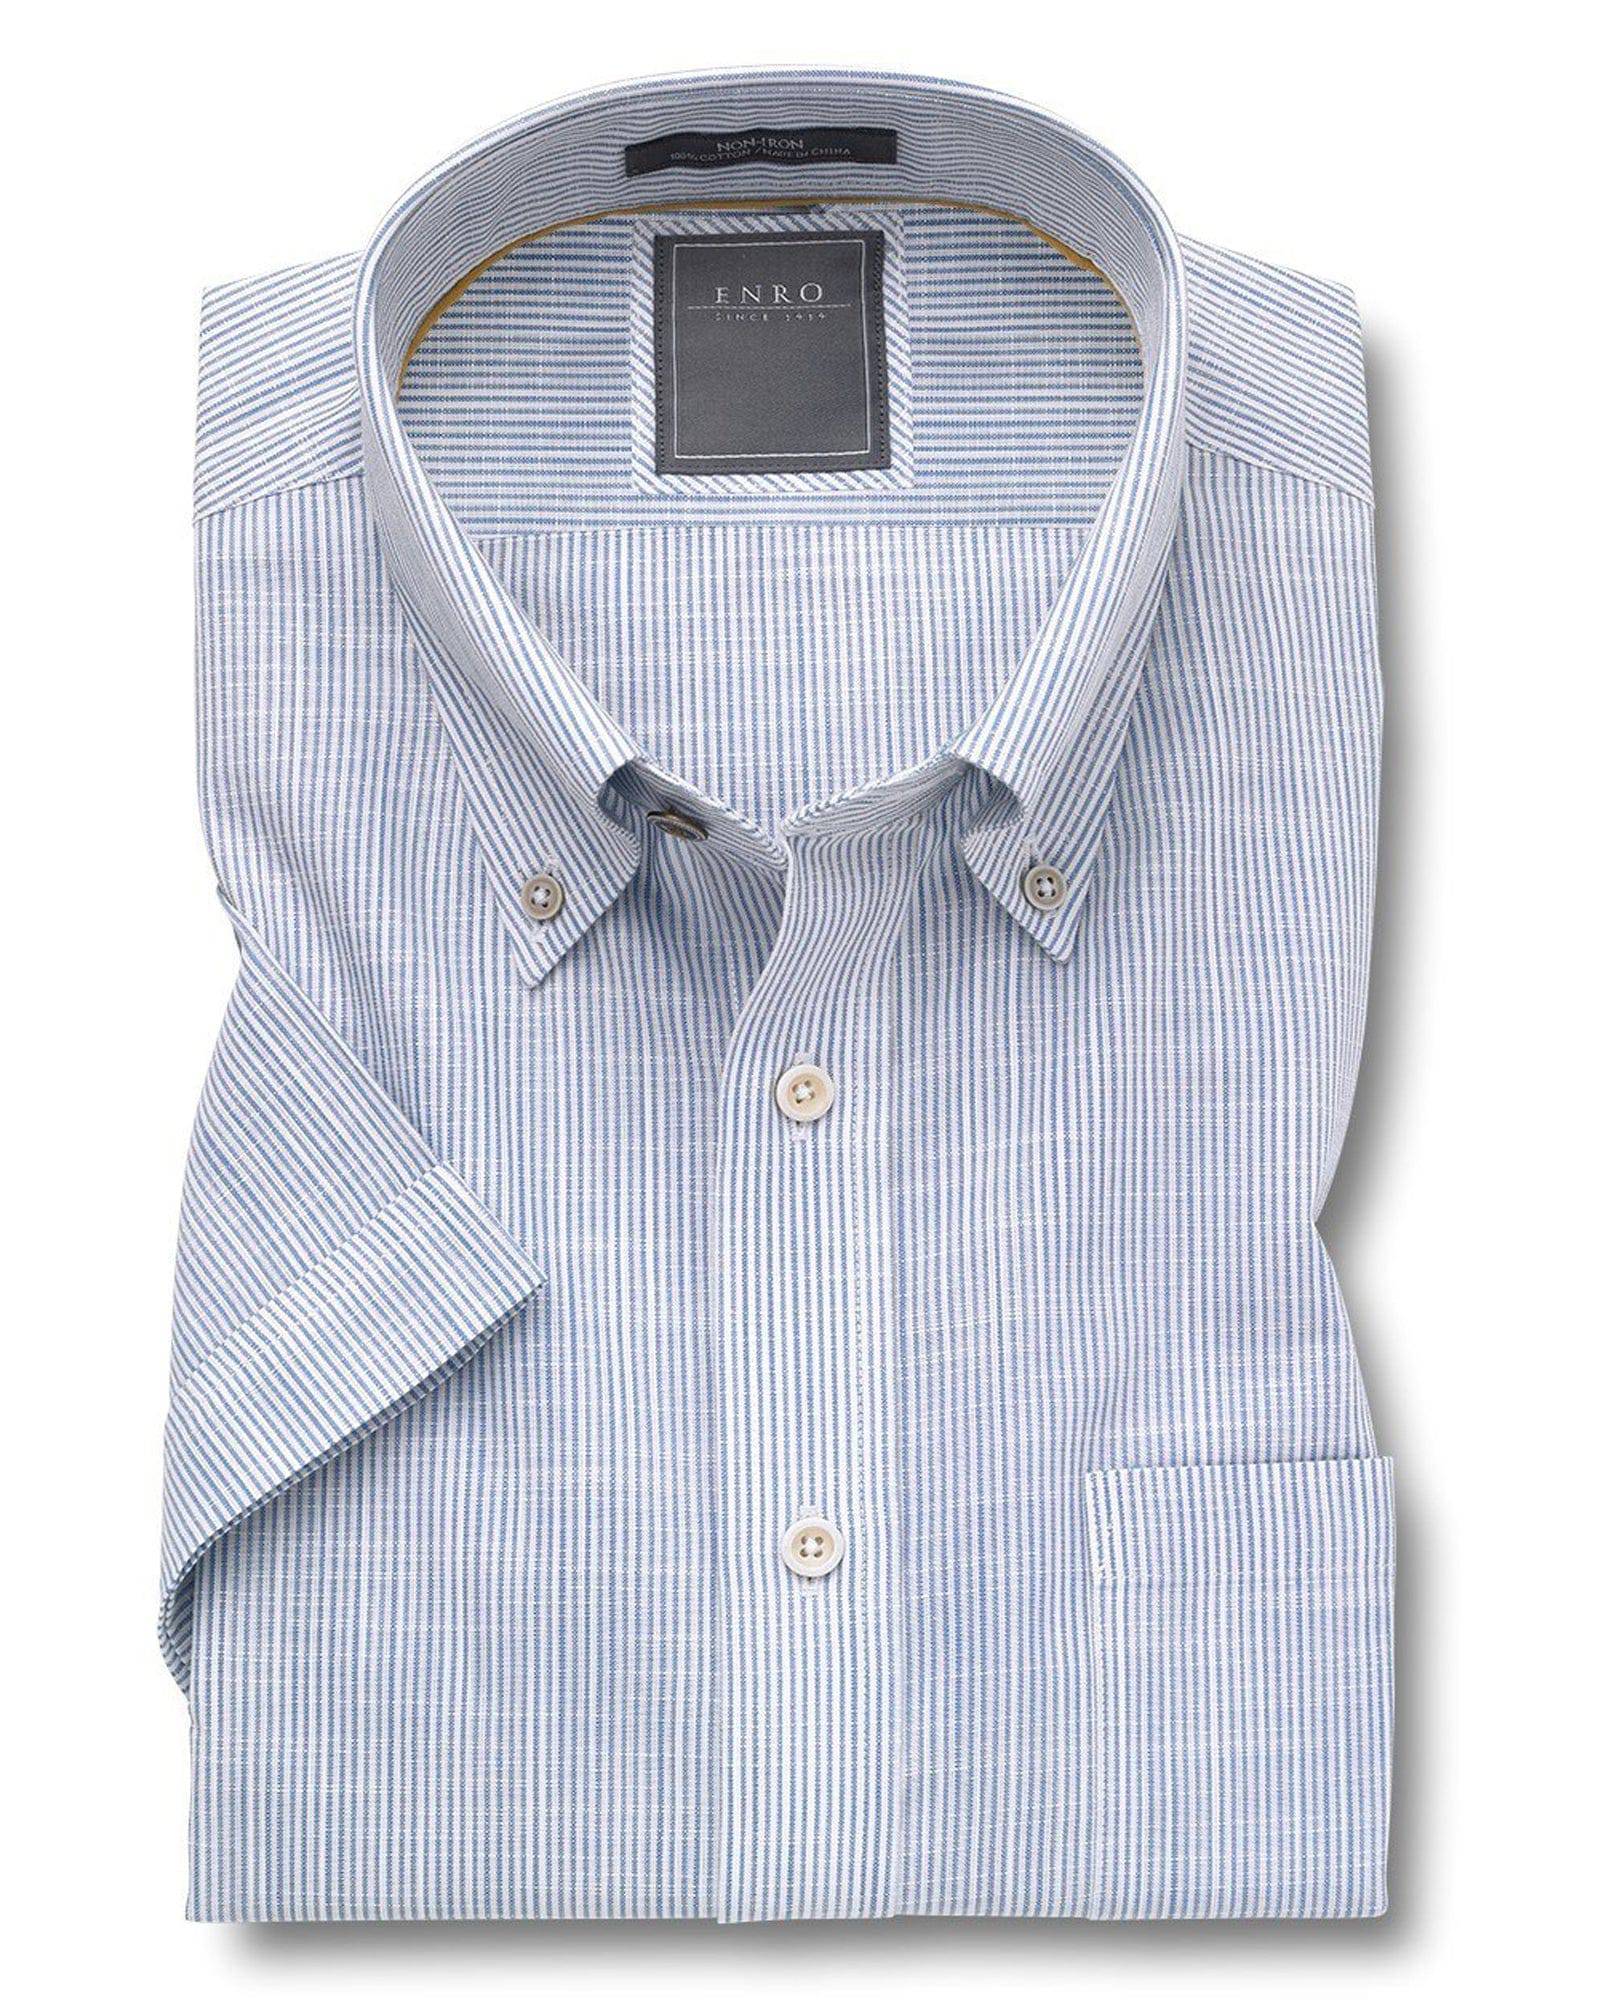 Enro Light Blue Stripe Short Sleeve Button Up Shirt - Rainwater's Men's Clothing and Tuxedo Rental